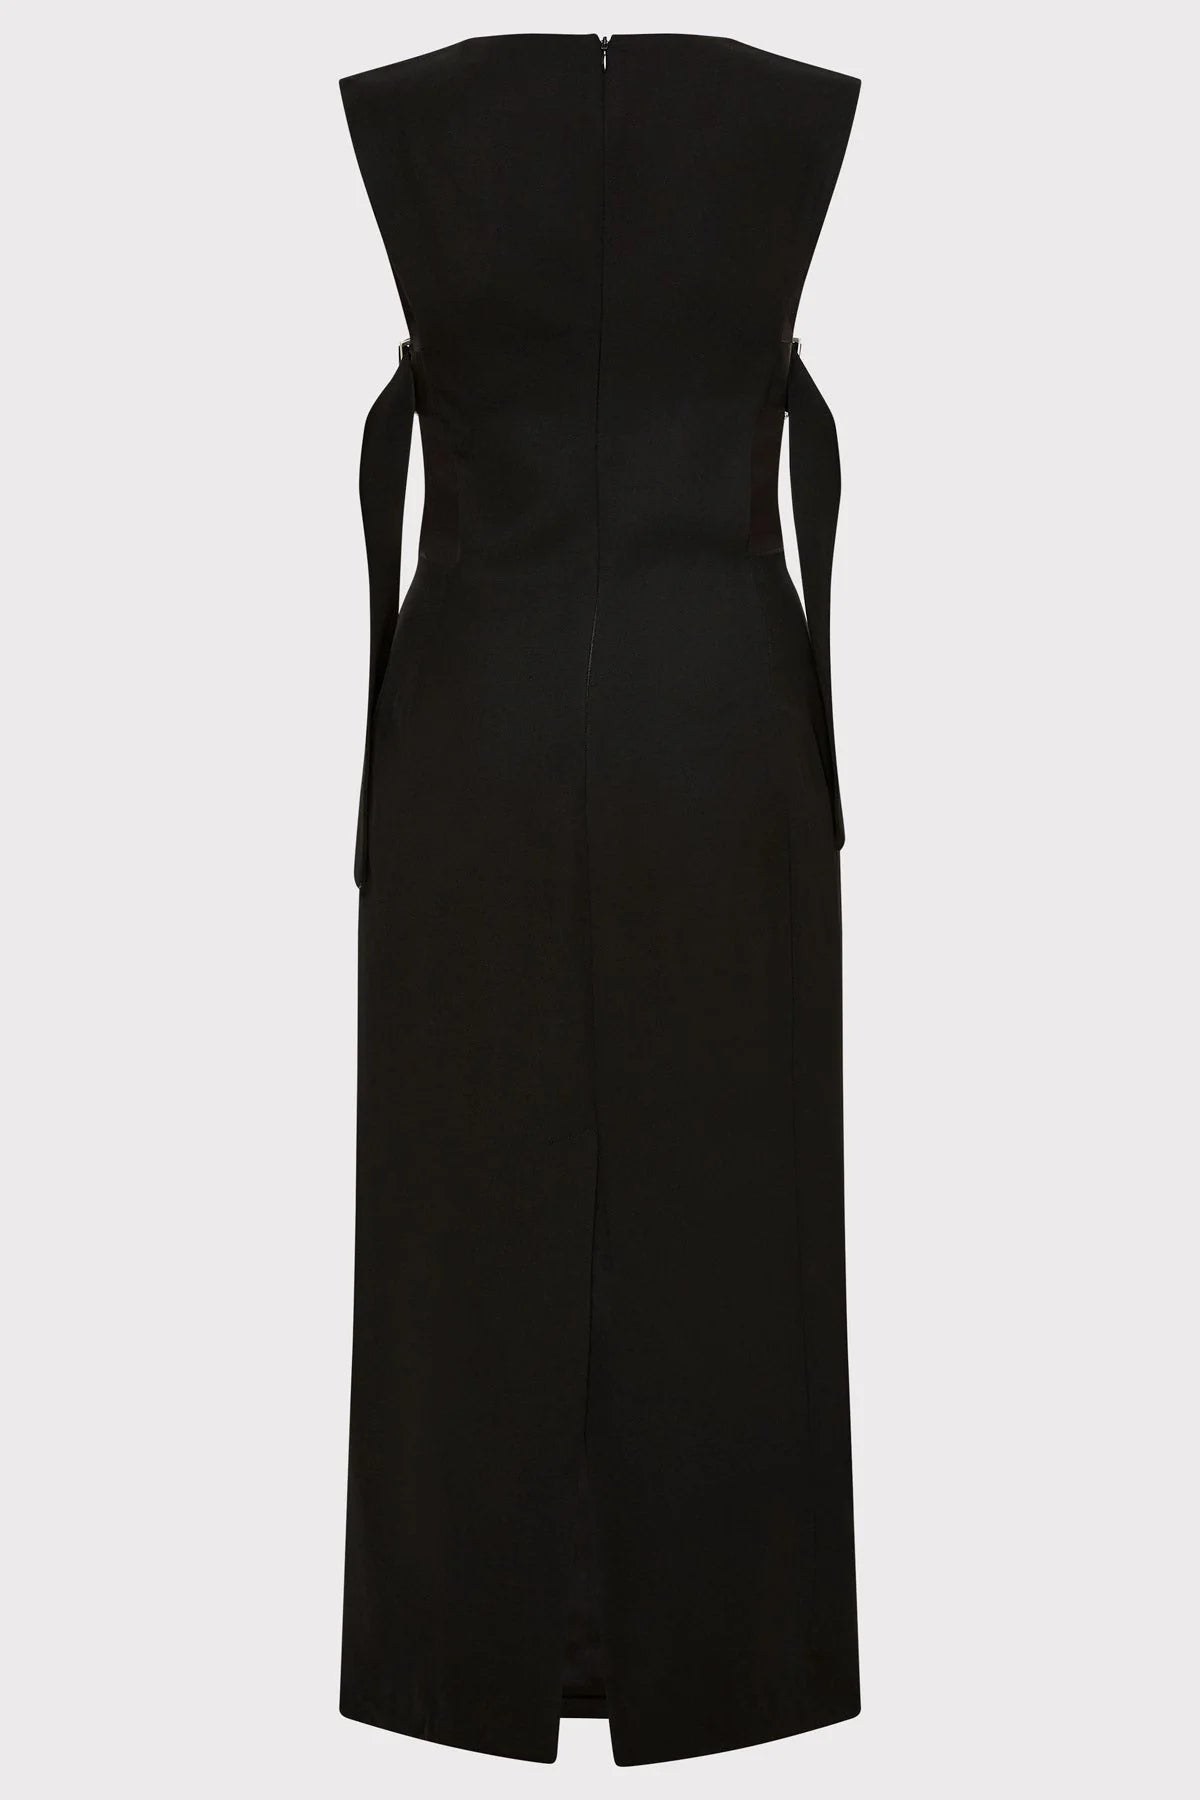 St.Agni Classic Side Detail Dress - Black